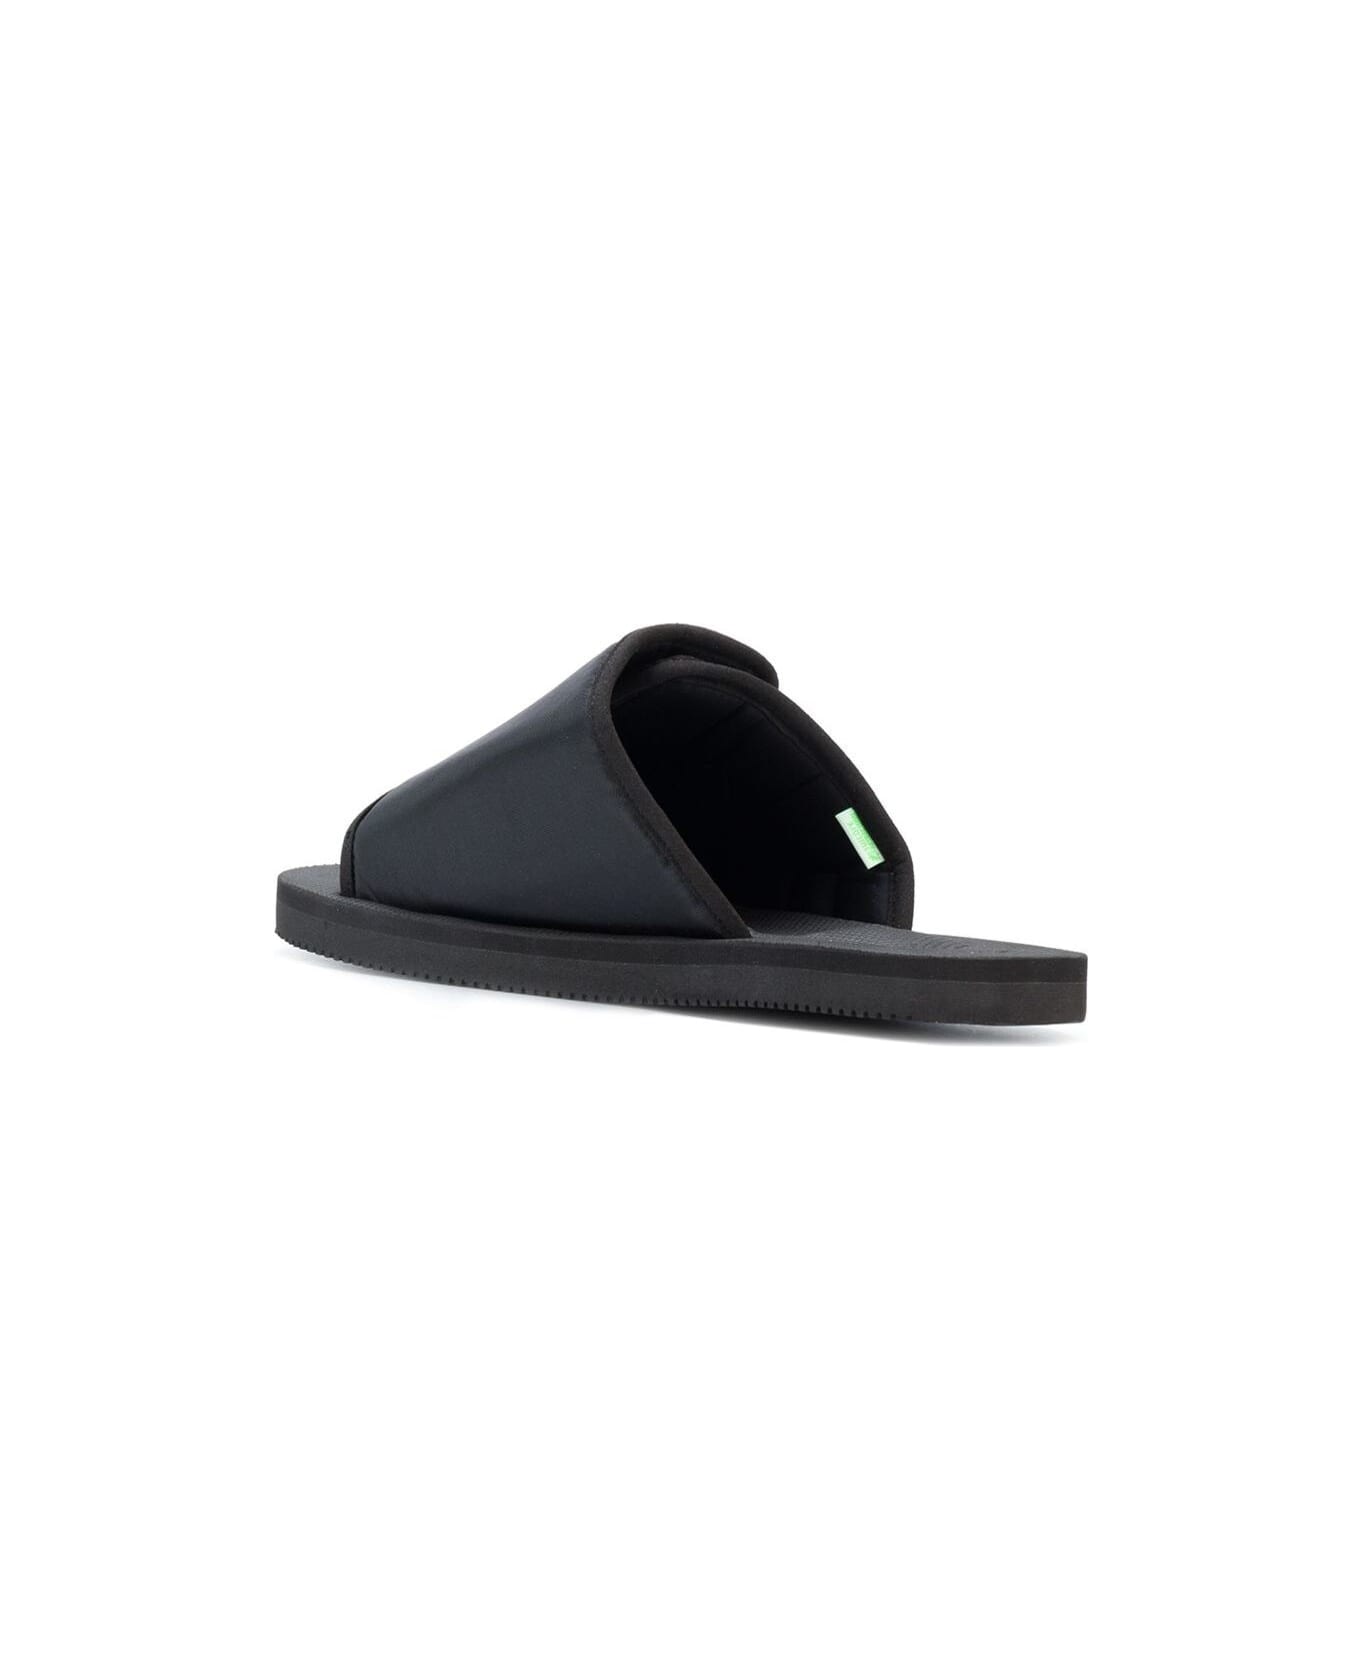 SUICOKE 'kaw-cab' Black Sandals With Velcro Fastening In Nylon Woman Suicoke - Black